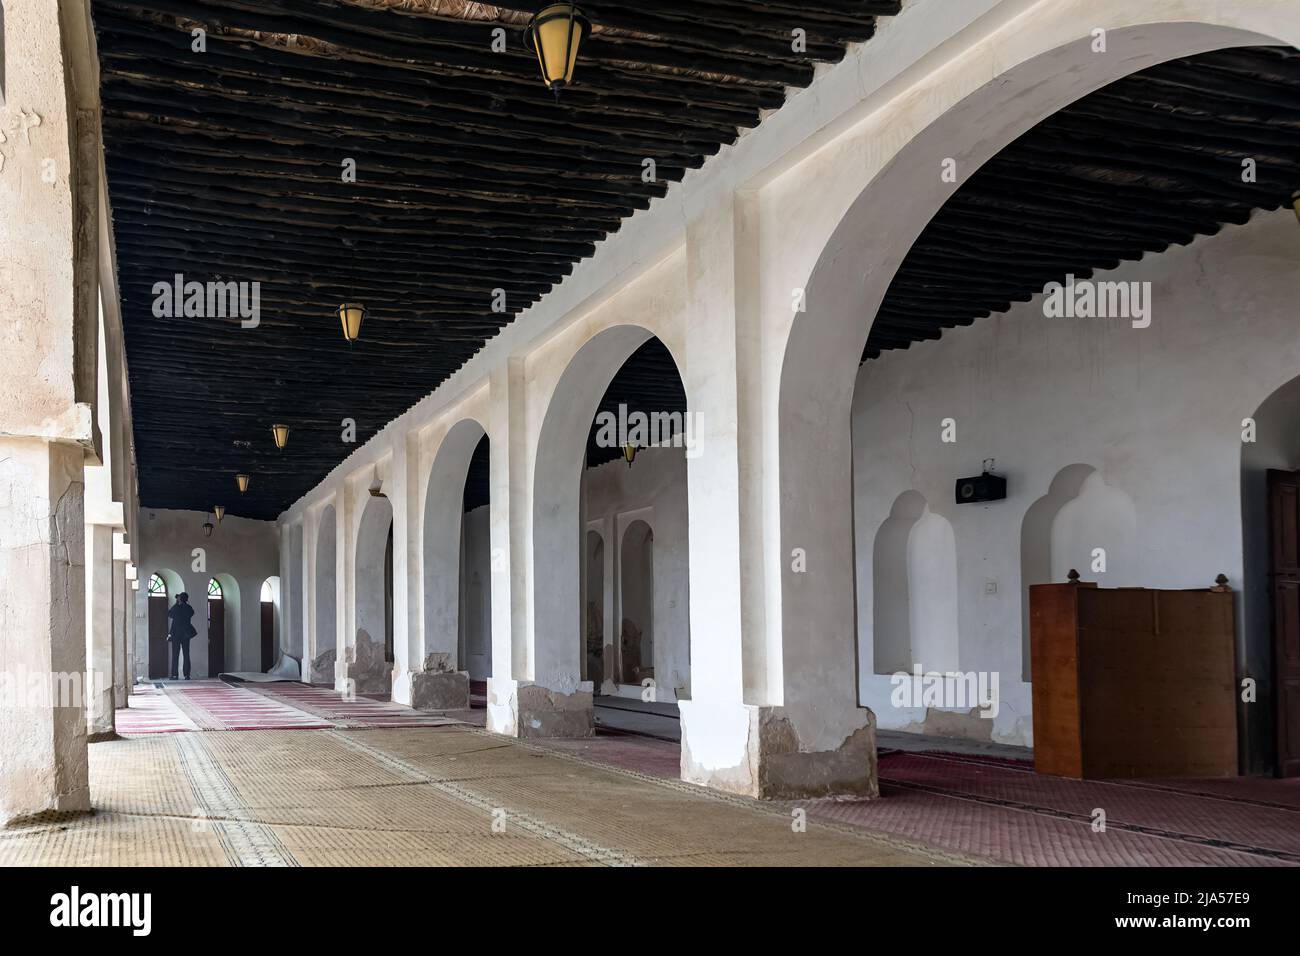 Inside view of historical old Al-Uqair port in Saudi Arabia. Stock Photo